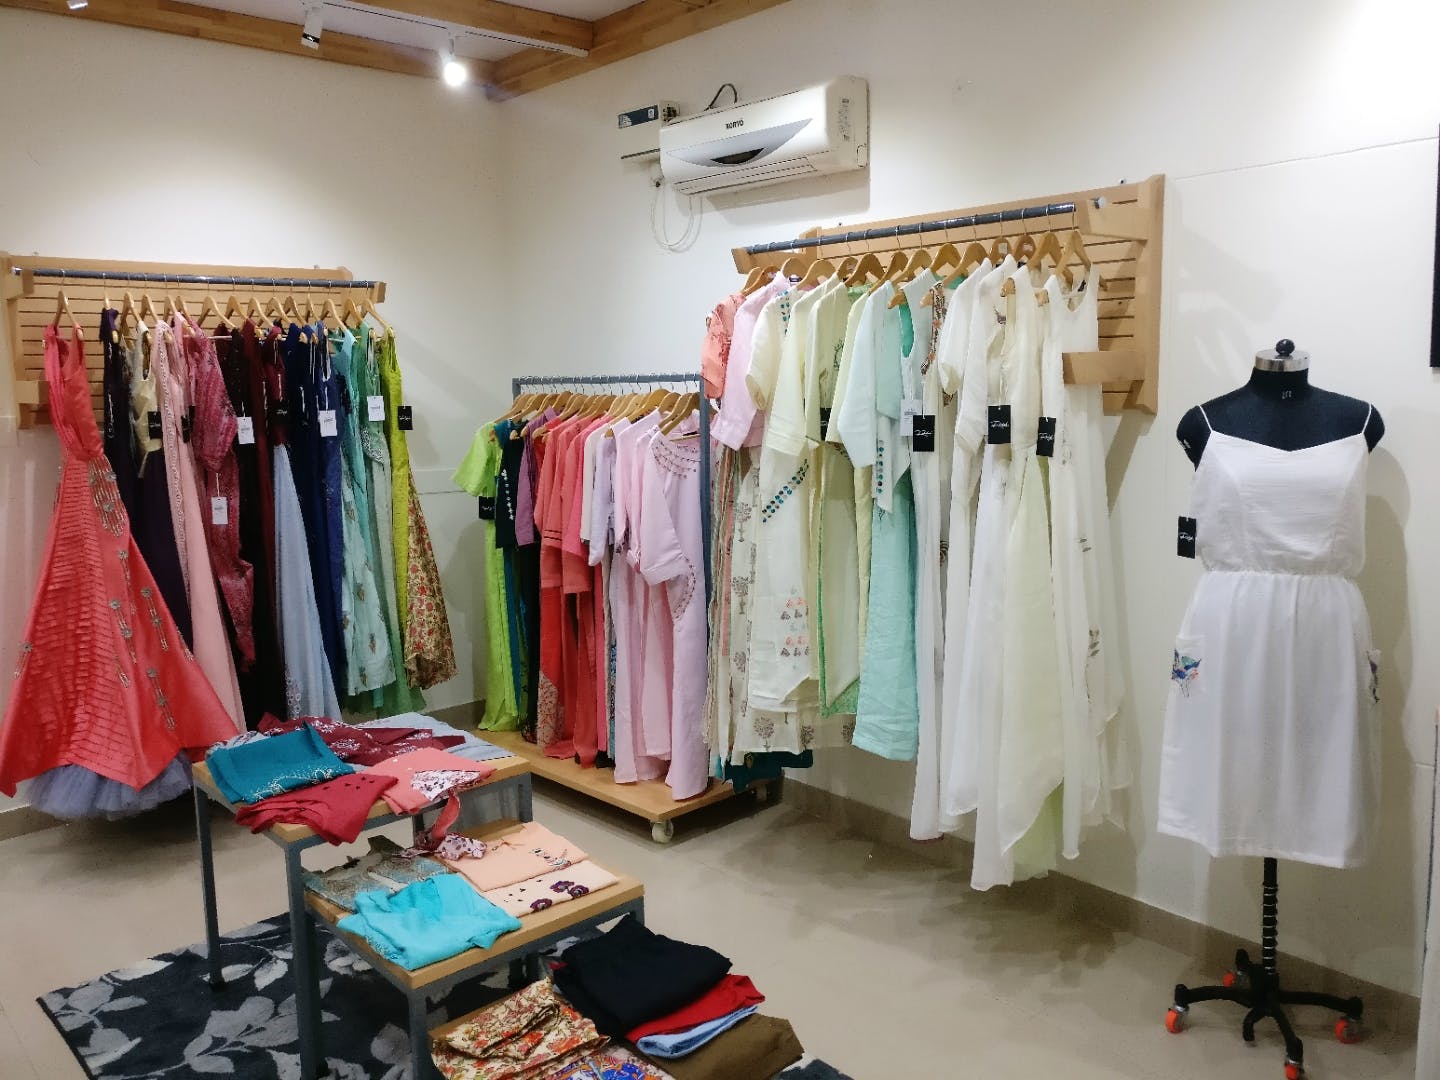 Boutique,Room,Clothing,Clothes hanger,Fashion,Dress,Furniture,Outlet store,Textile,Interior design